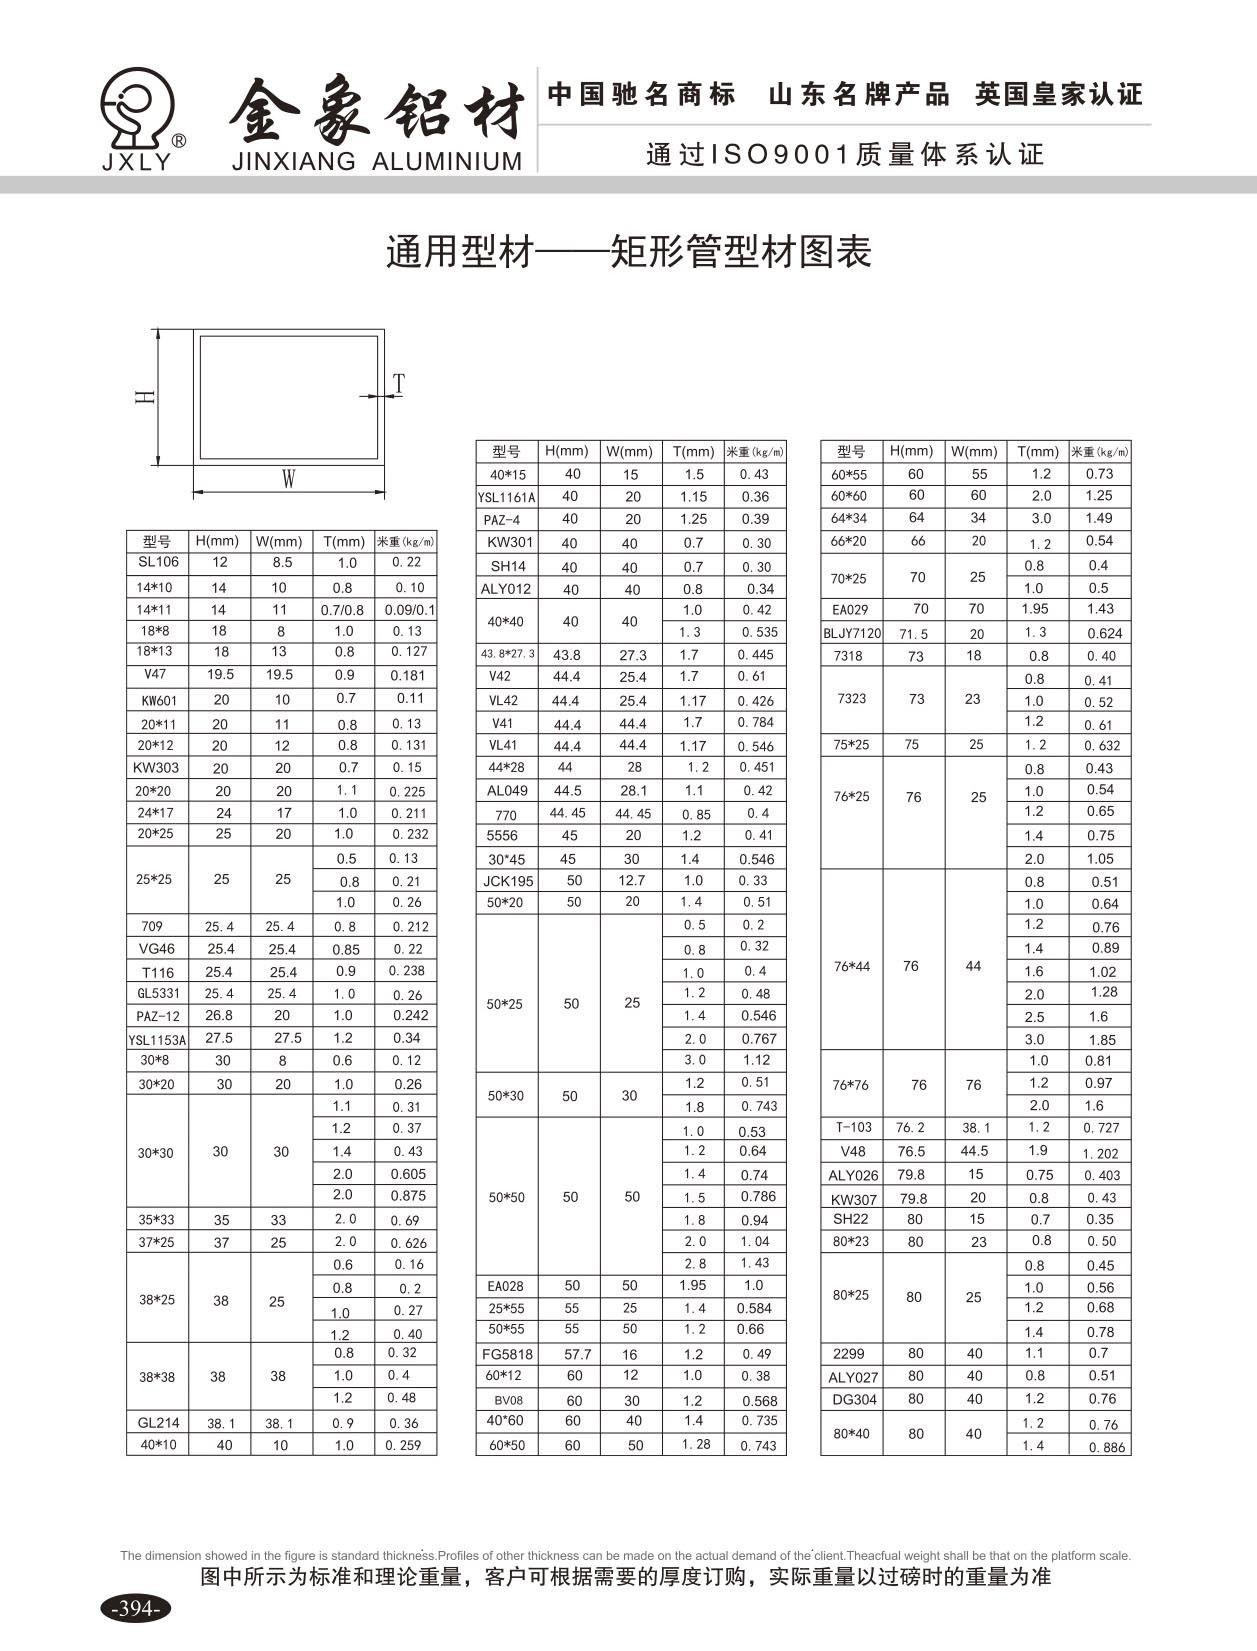 Chart of rectangular tube profiles